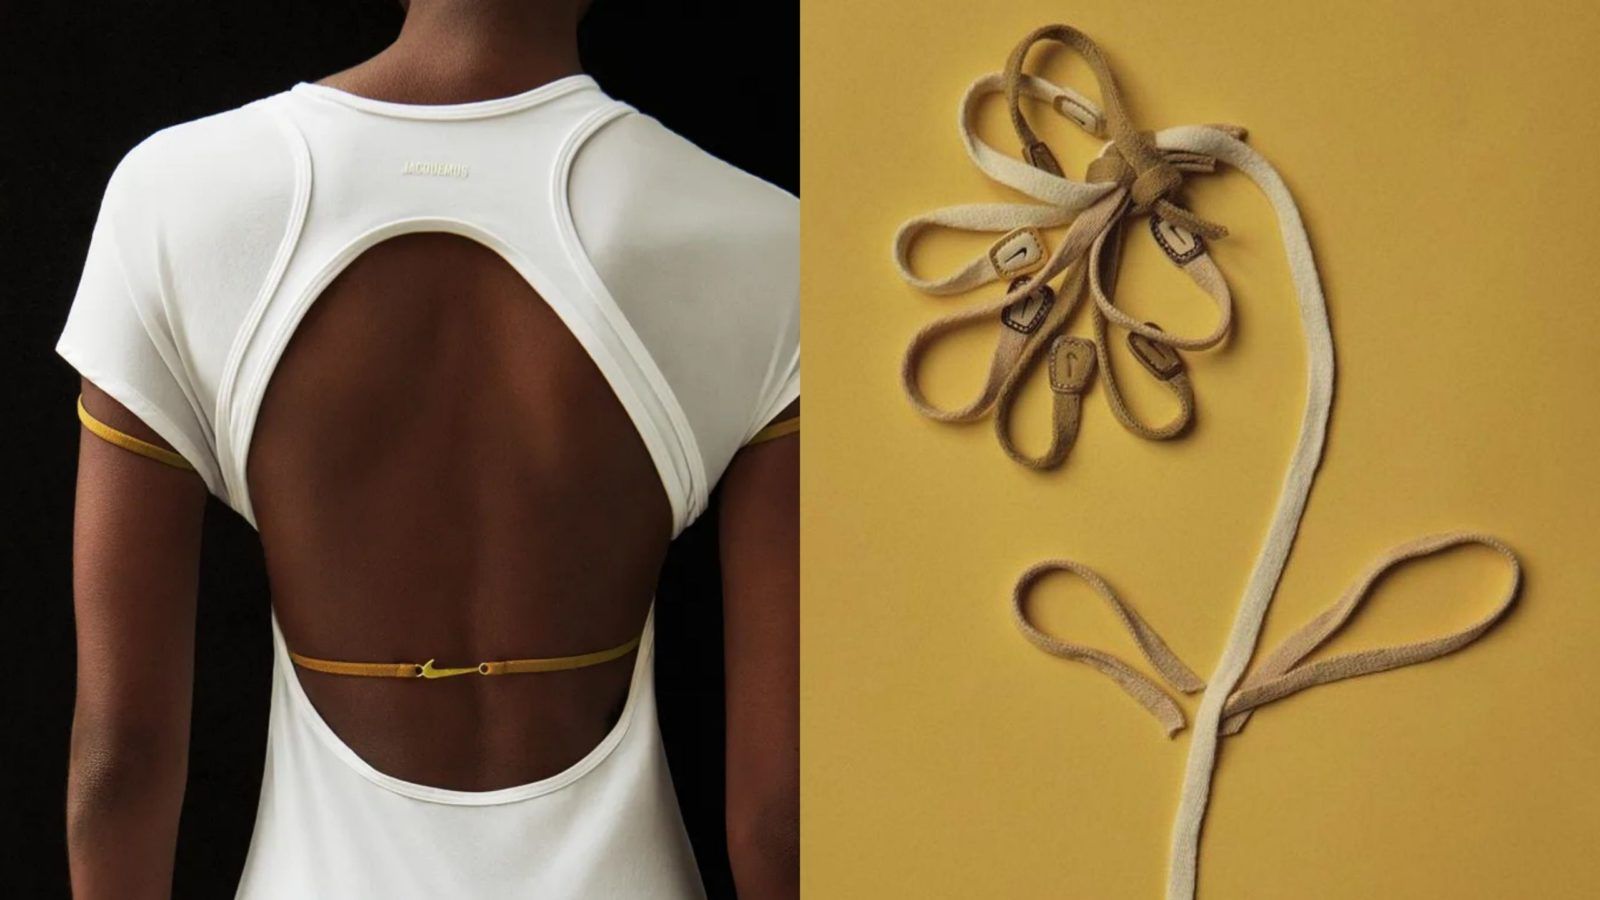 Jacquemus and Nike team up to make sportswear sensual again